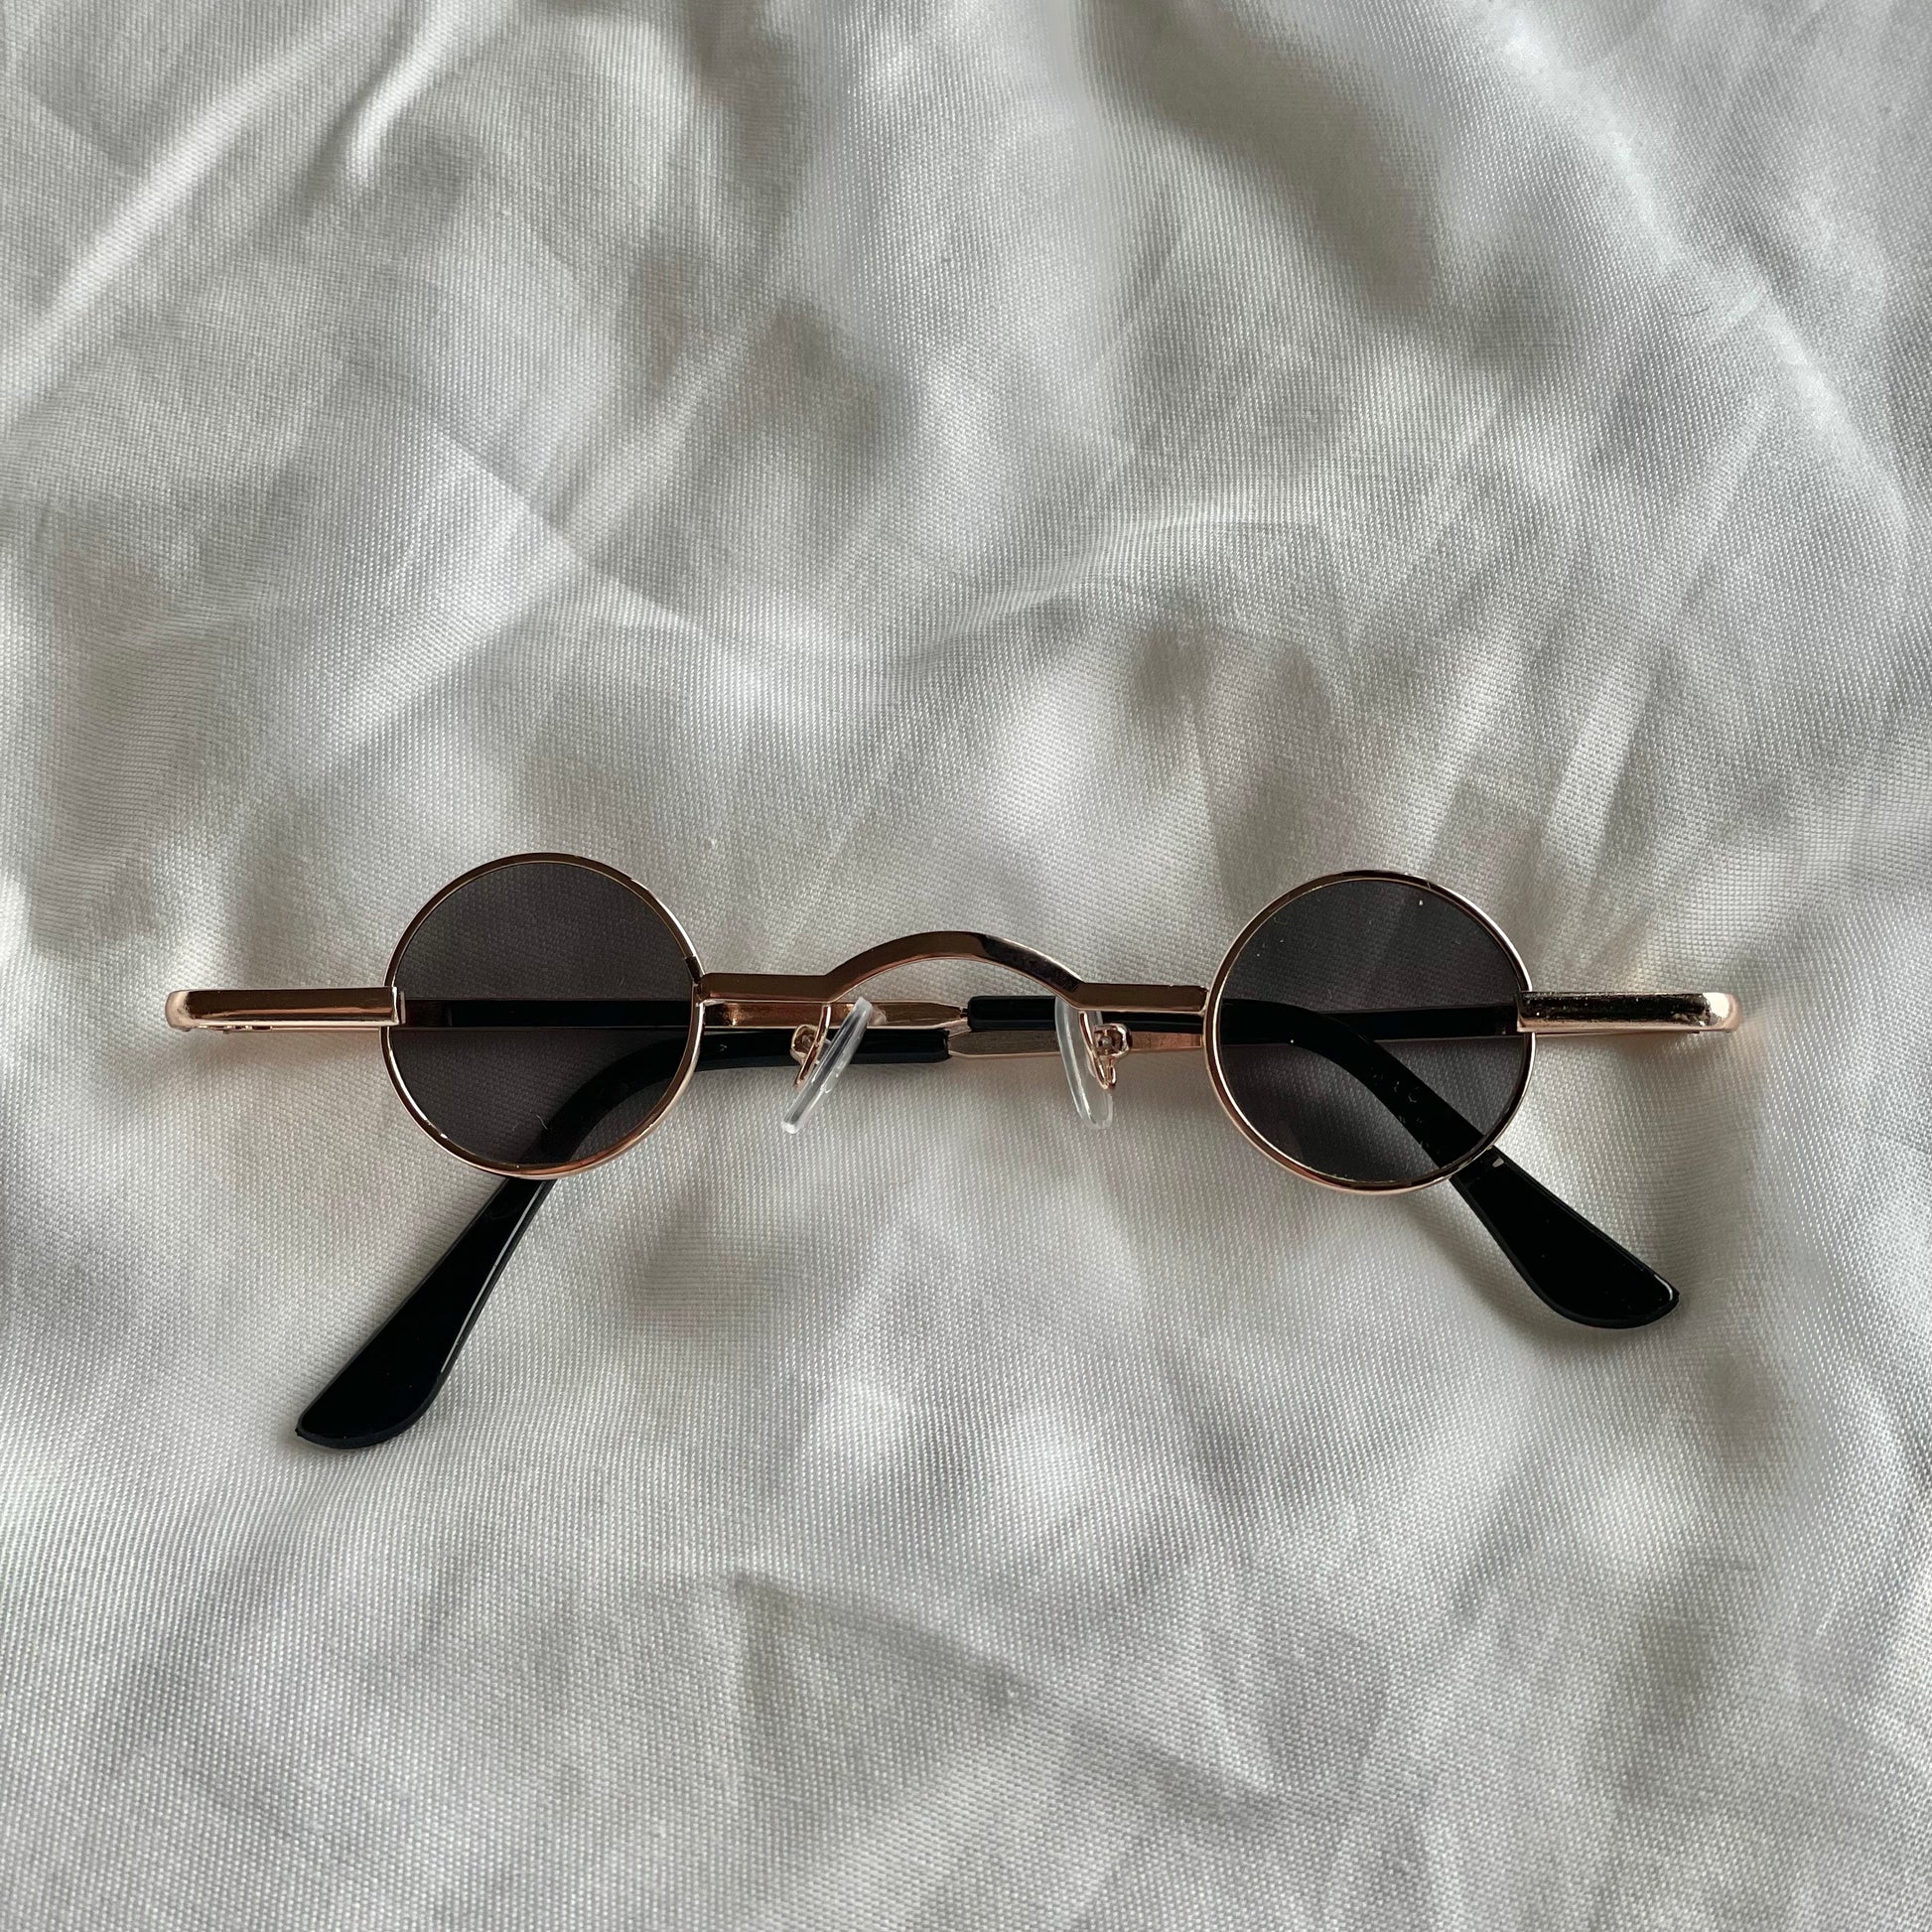 Round Silver Mirror Vintage Sunglasses For Men